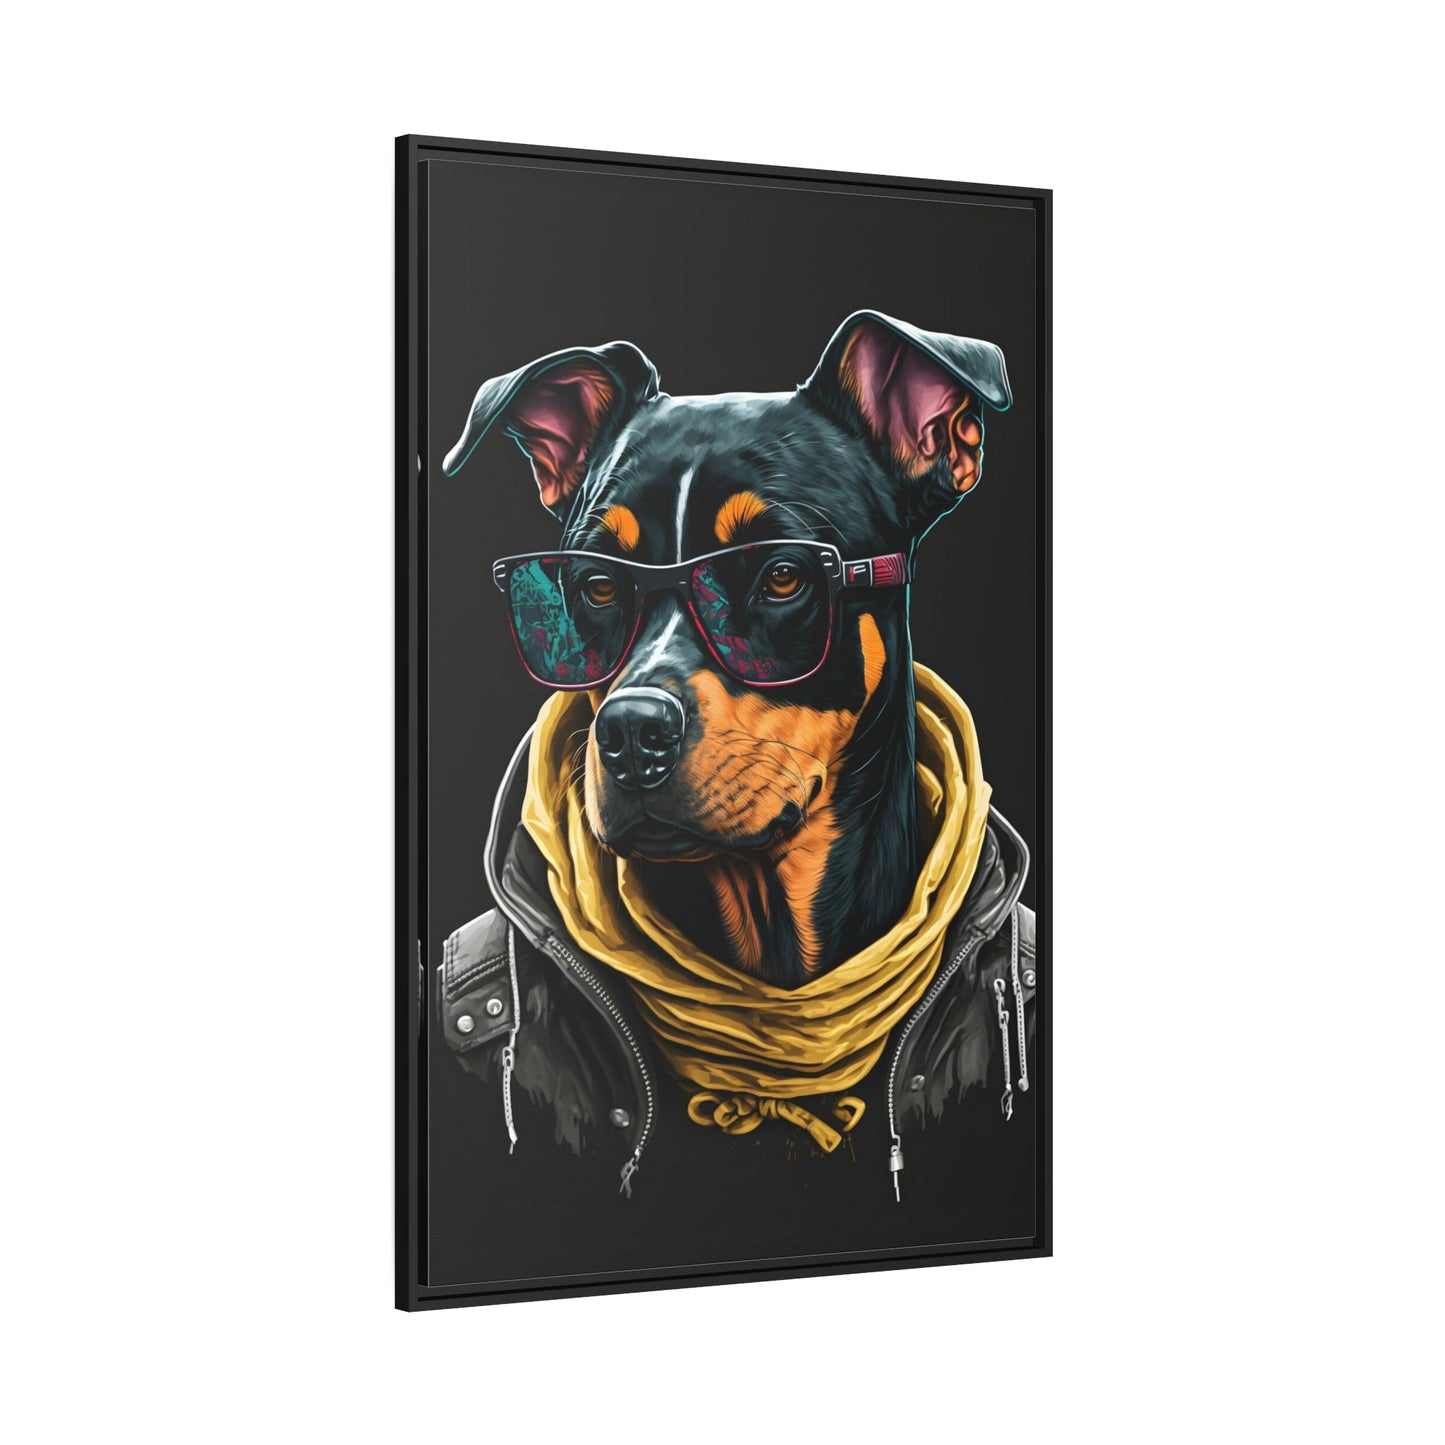 Dog's Best Friend: Poster of a Beloved Canine on Framed Canvas